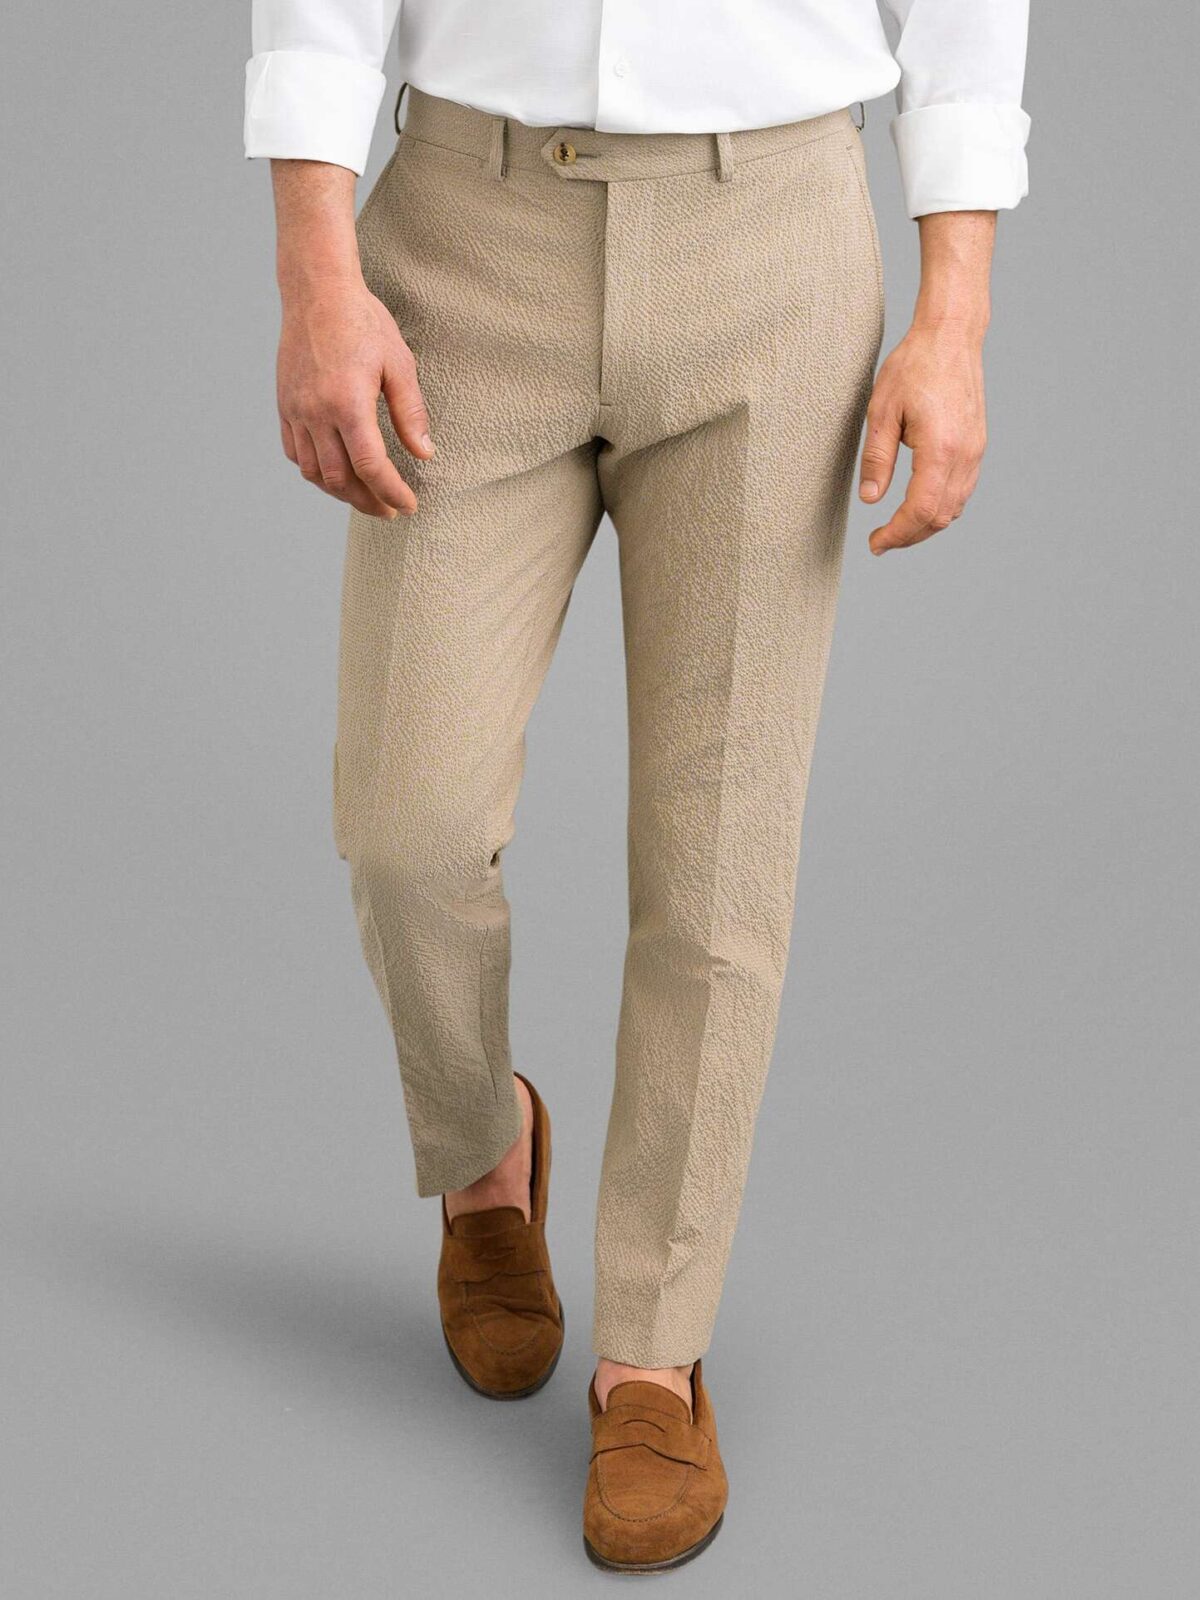 Beige Stretch Seersucker Dress Pant - Custom Fit Tailored Clothing